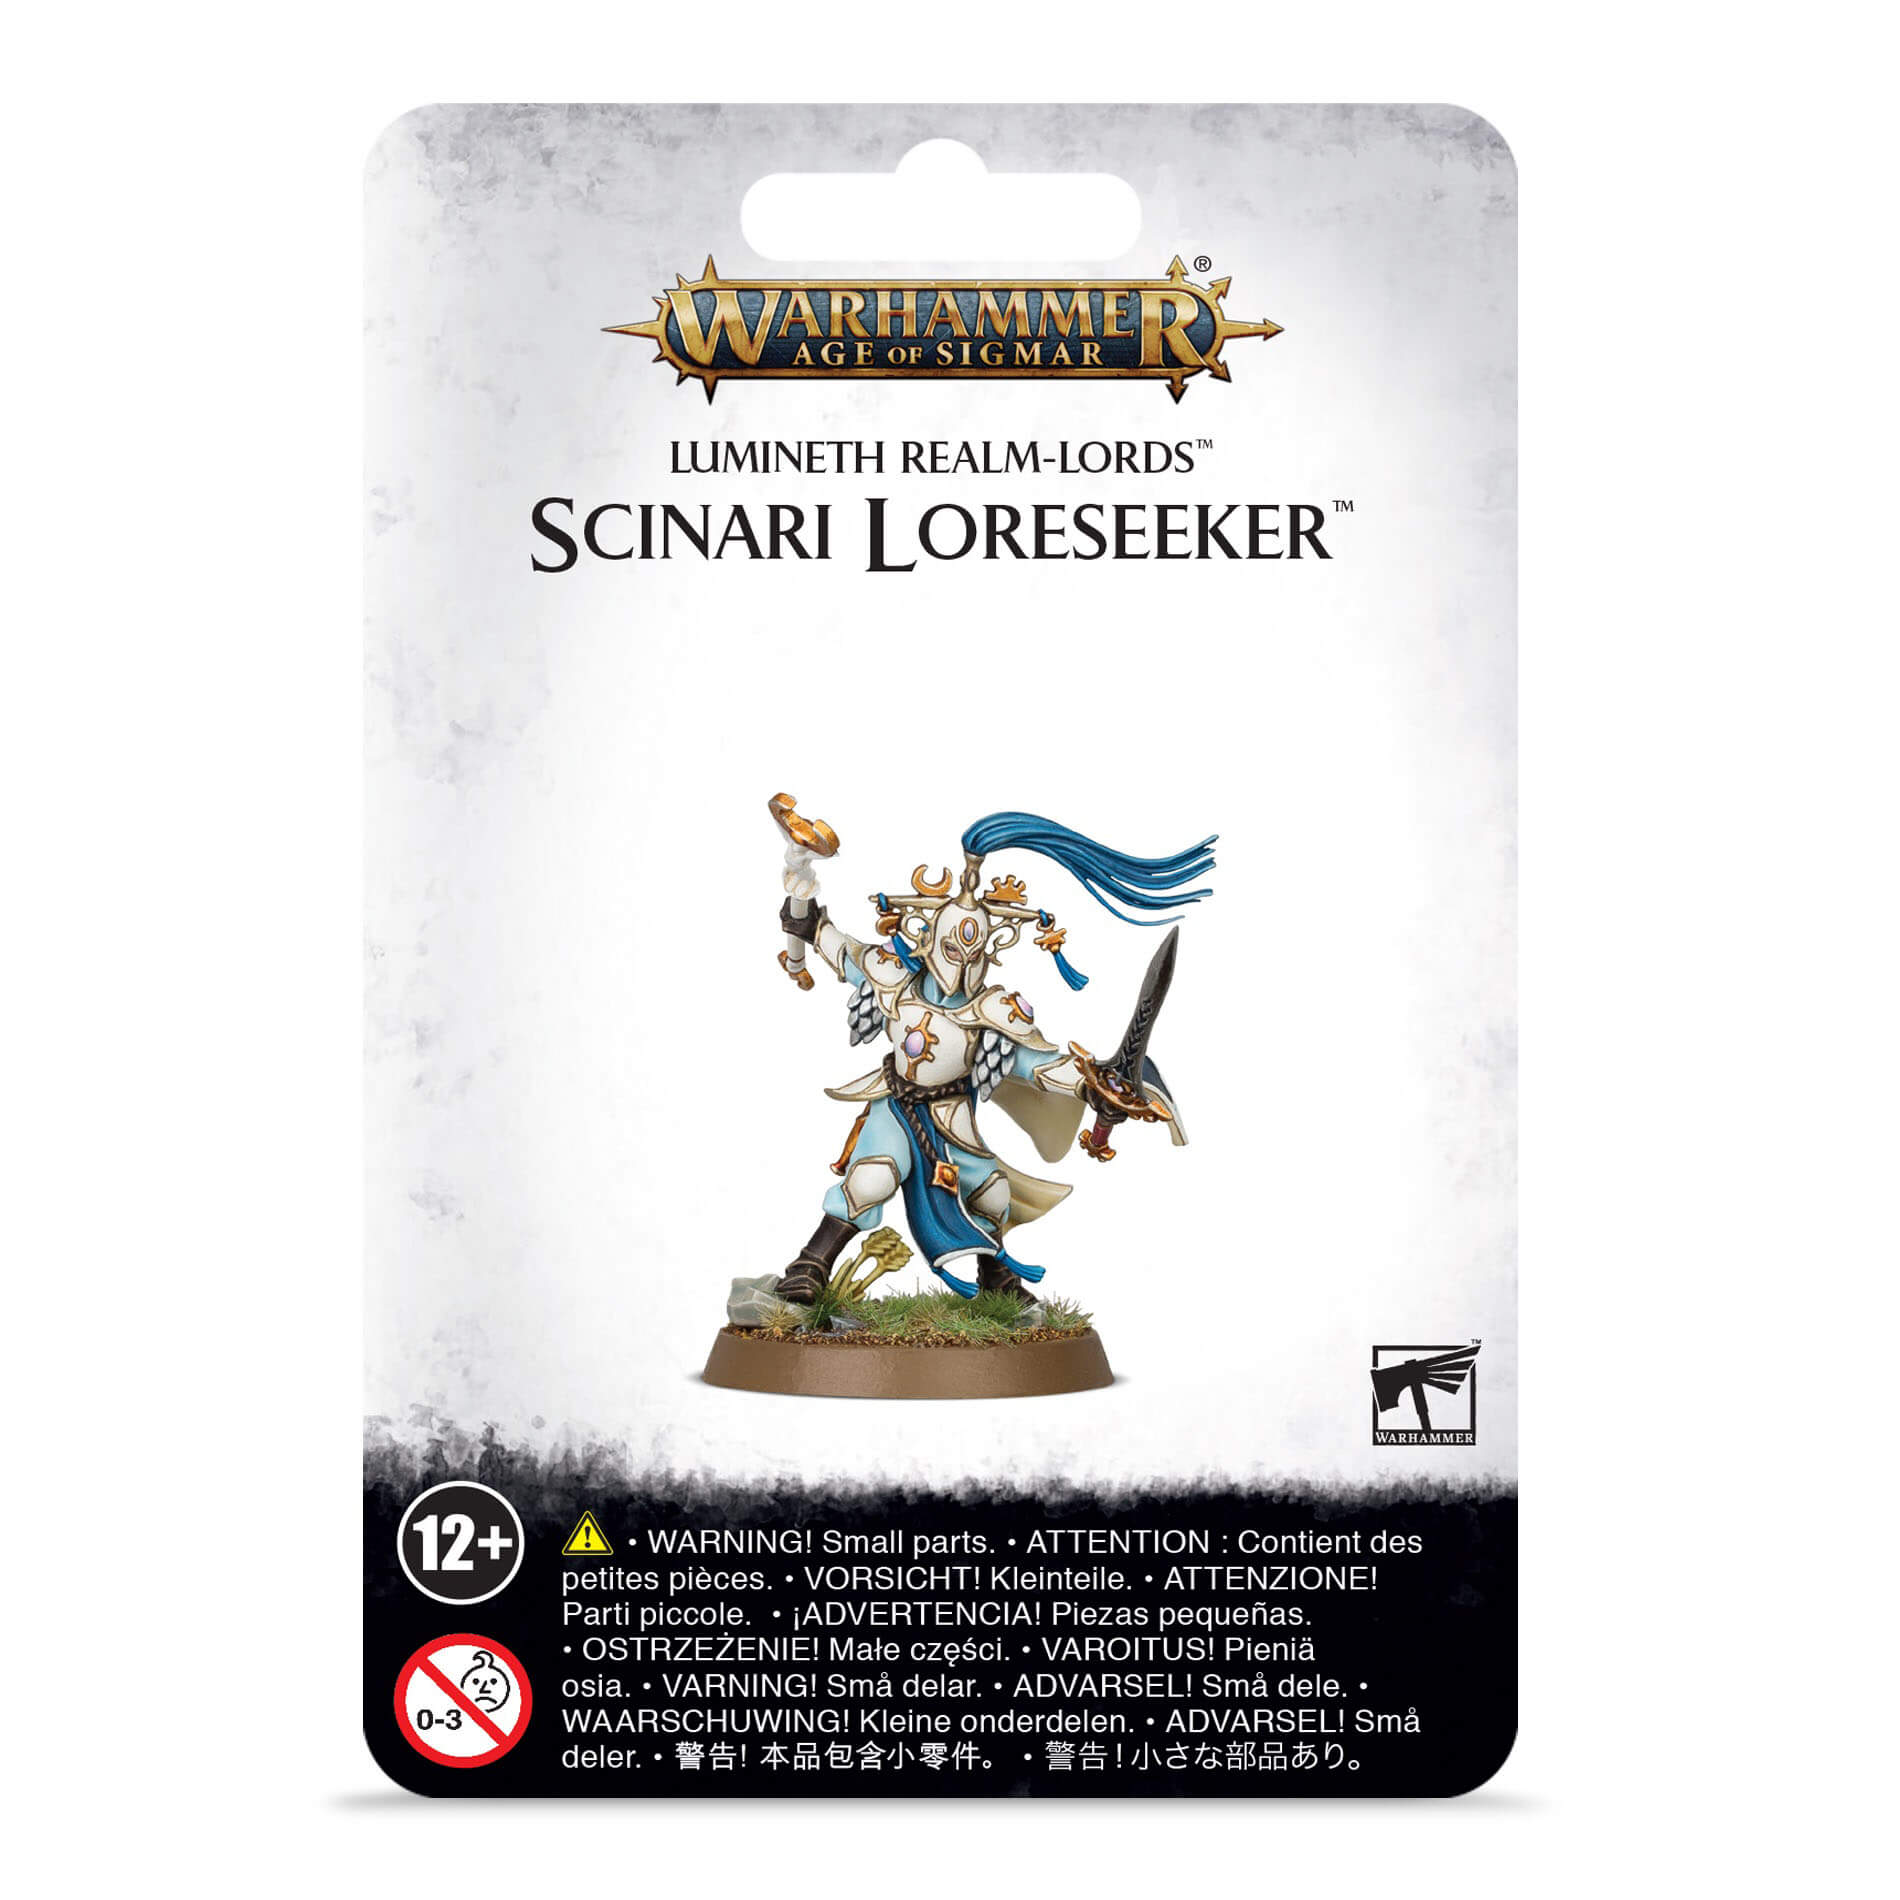 Warhammer Age of Sigmar Lumineth Realm-Lords Scinari Loreseeker Miniature